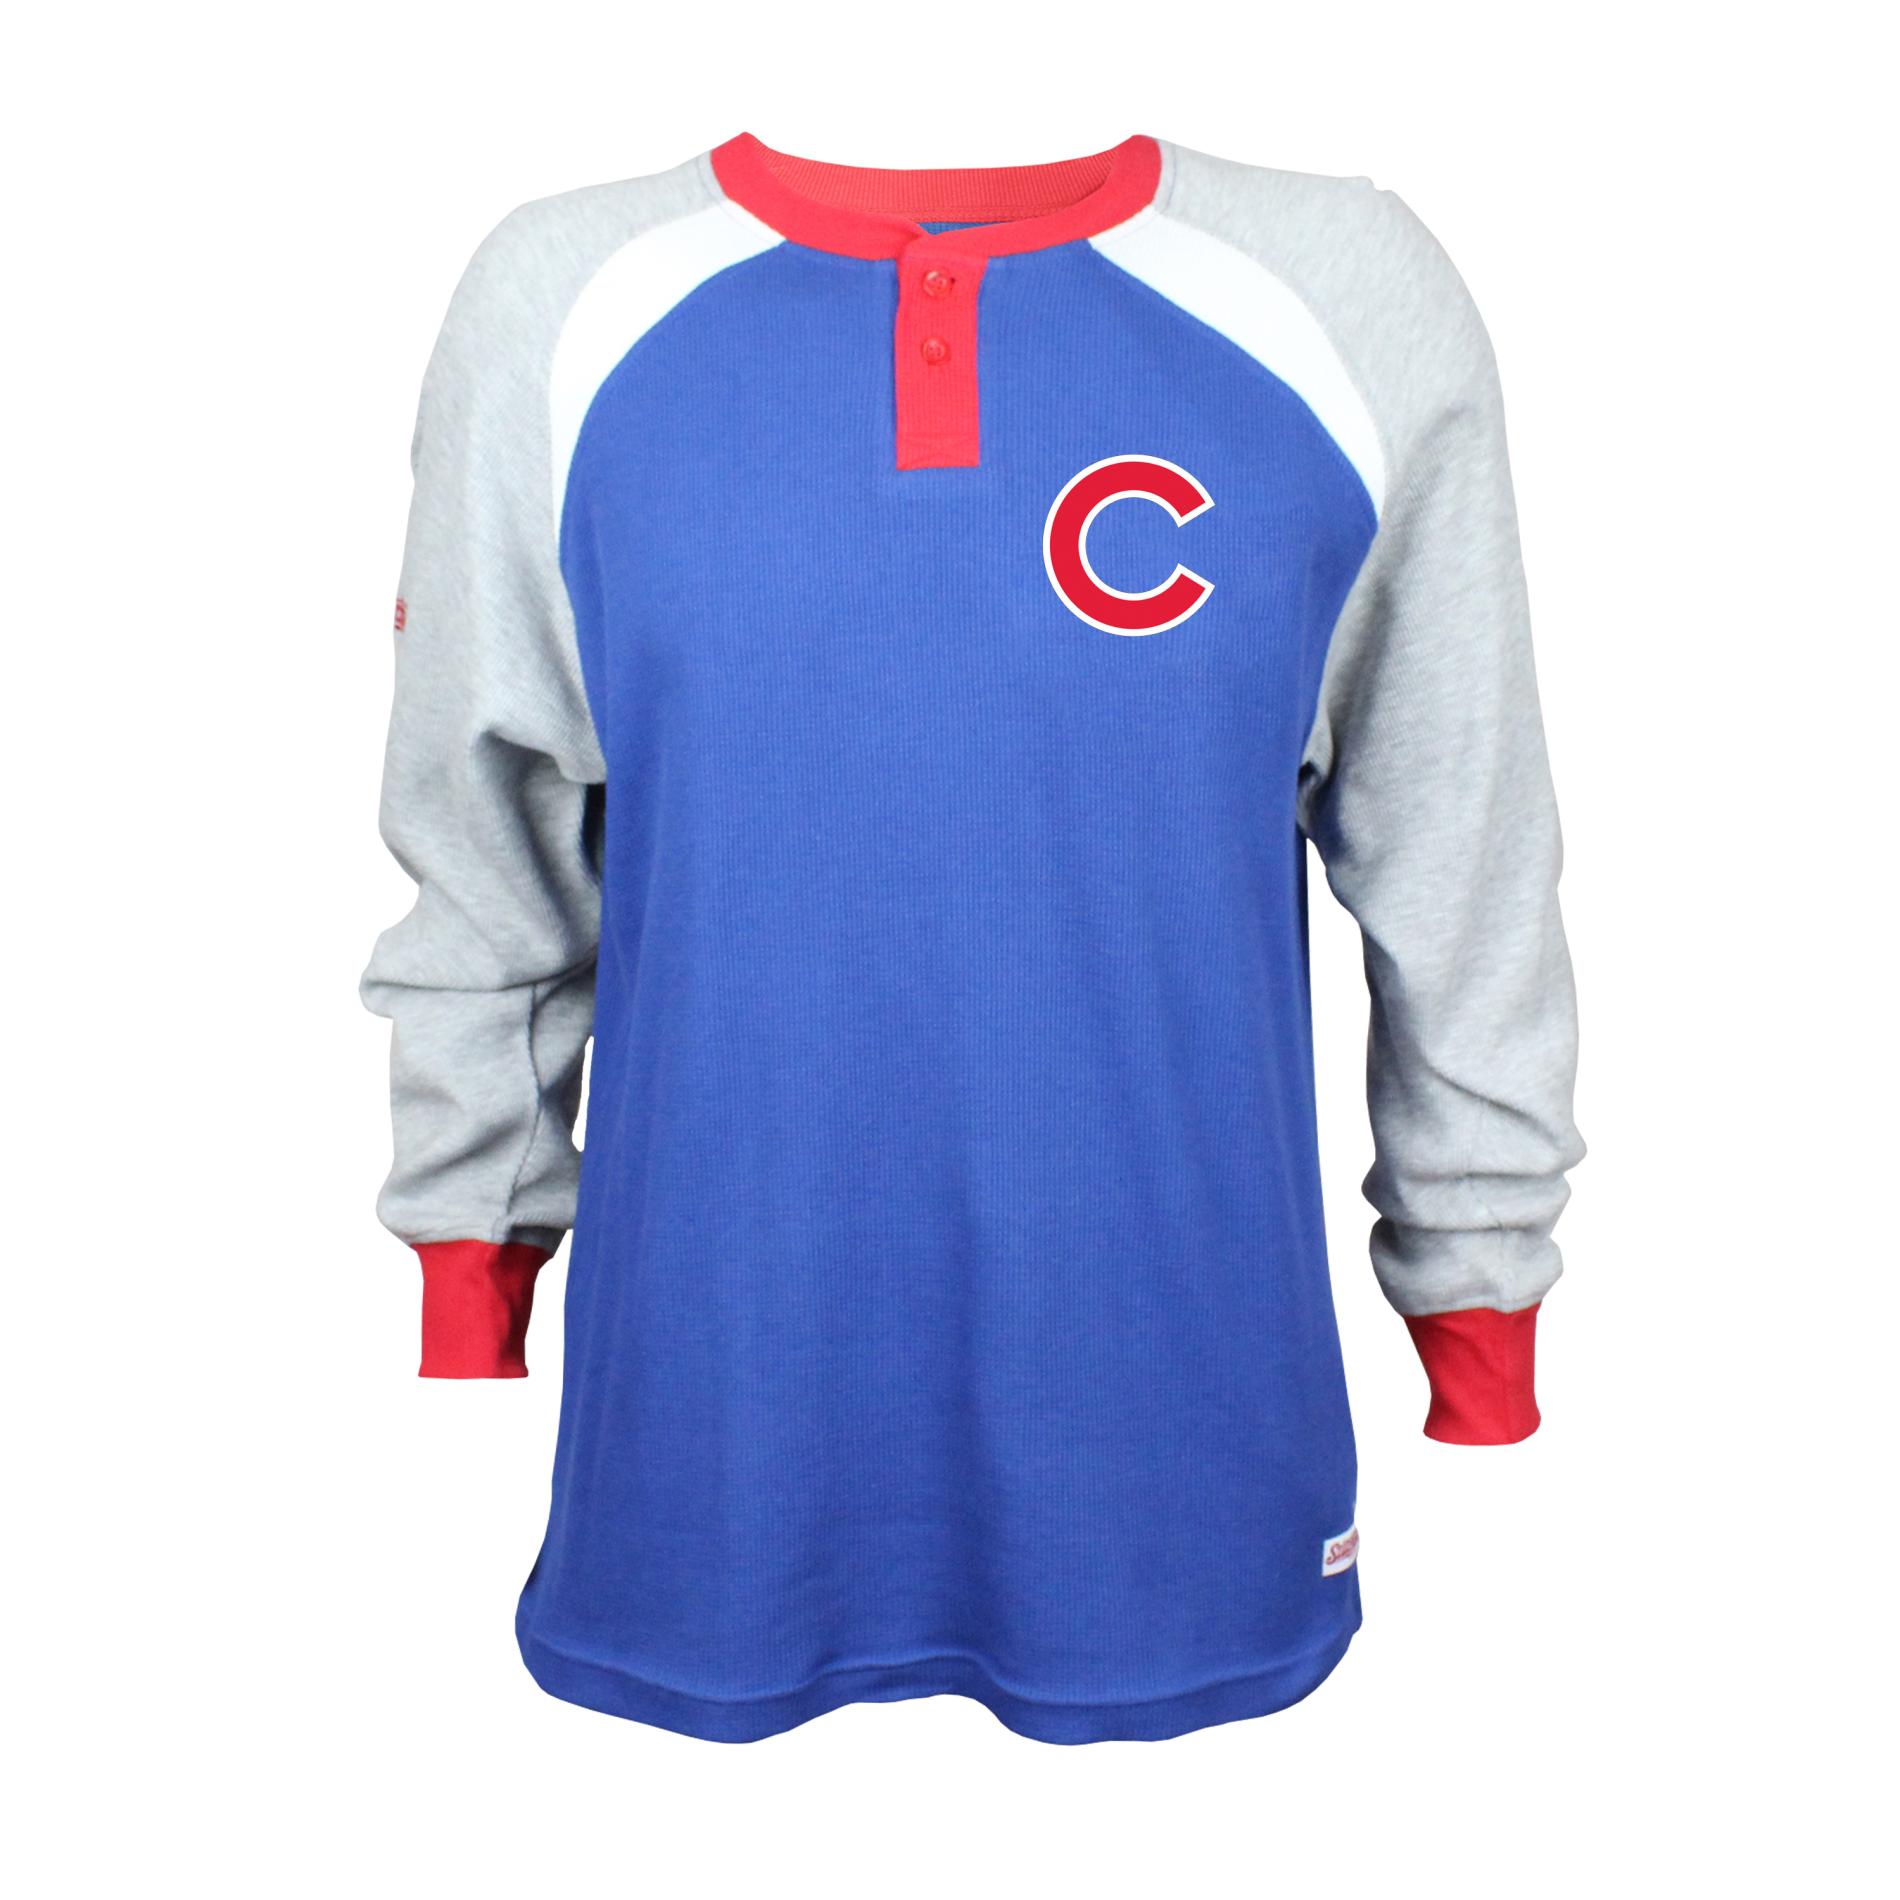 MLB Men's Thermal Henley Shirt - Chicago Cubs